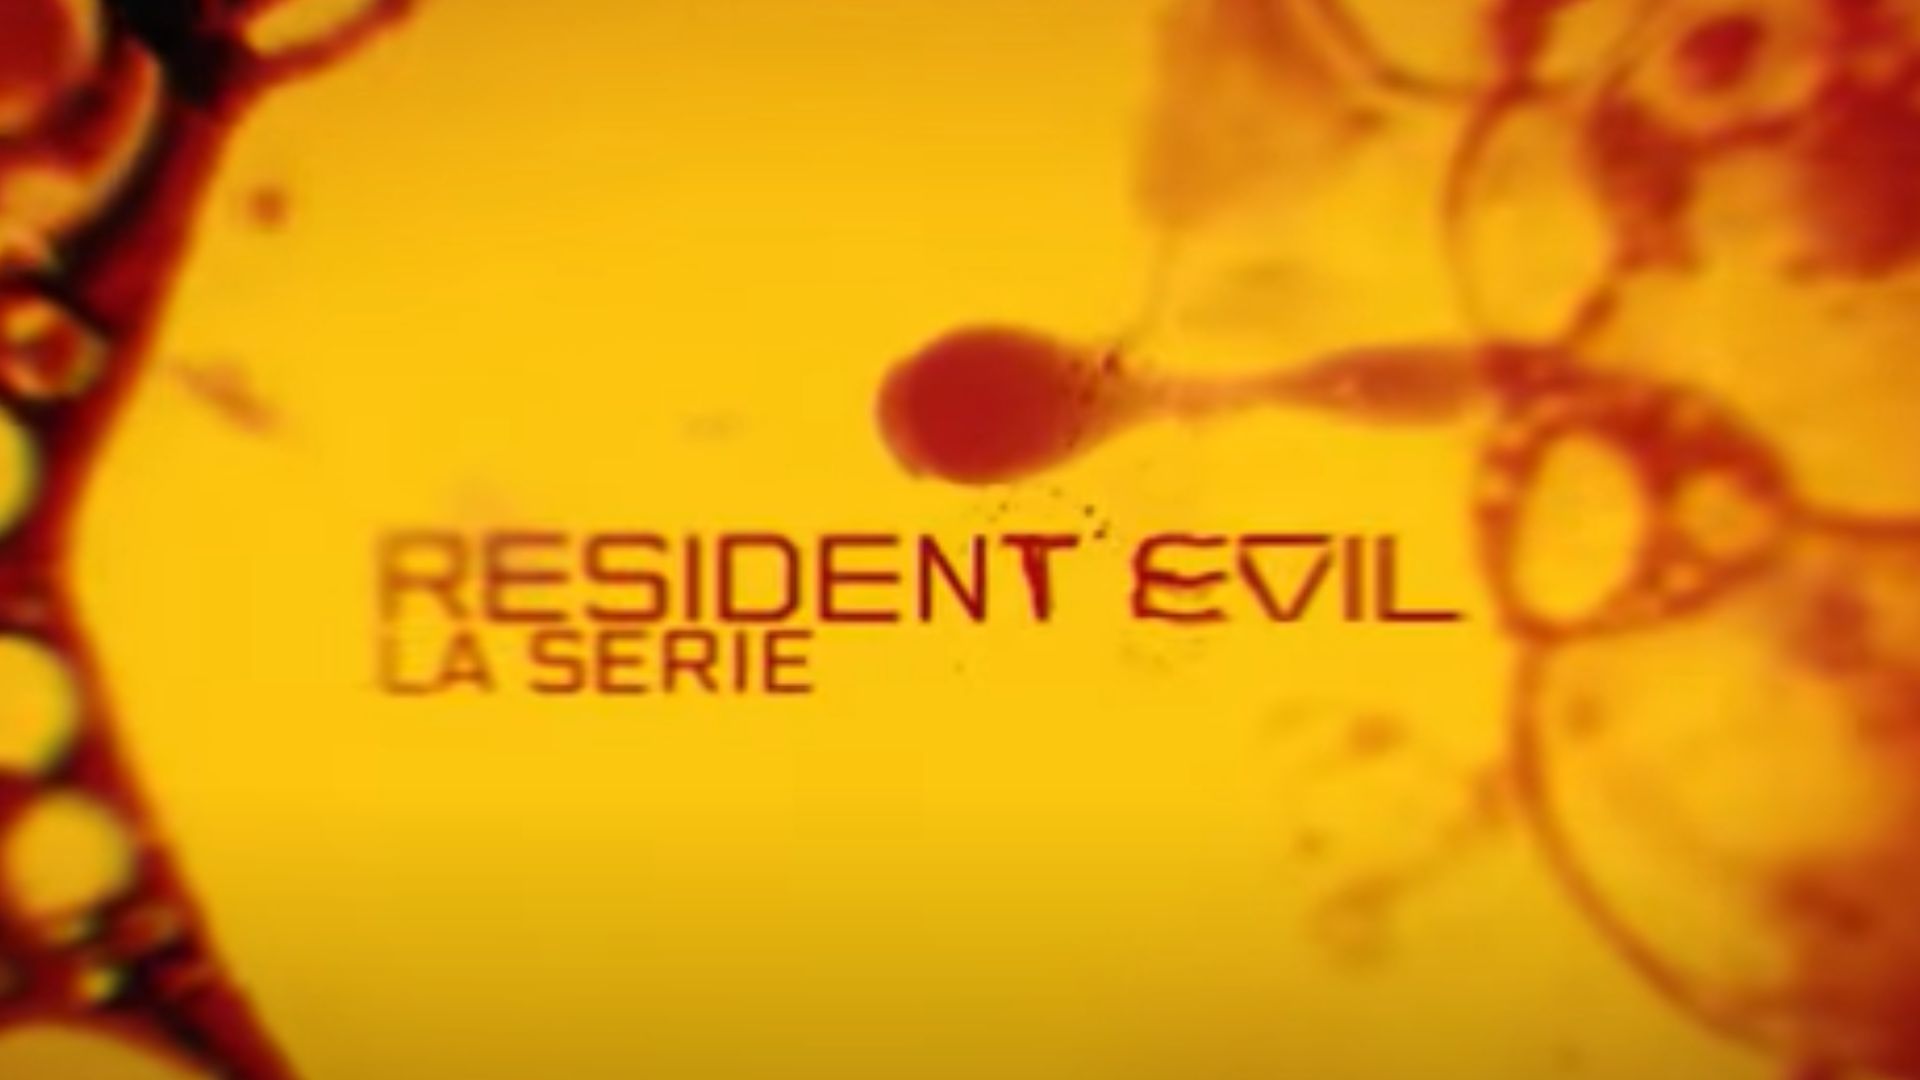 Resident Evil la serie